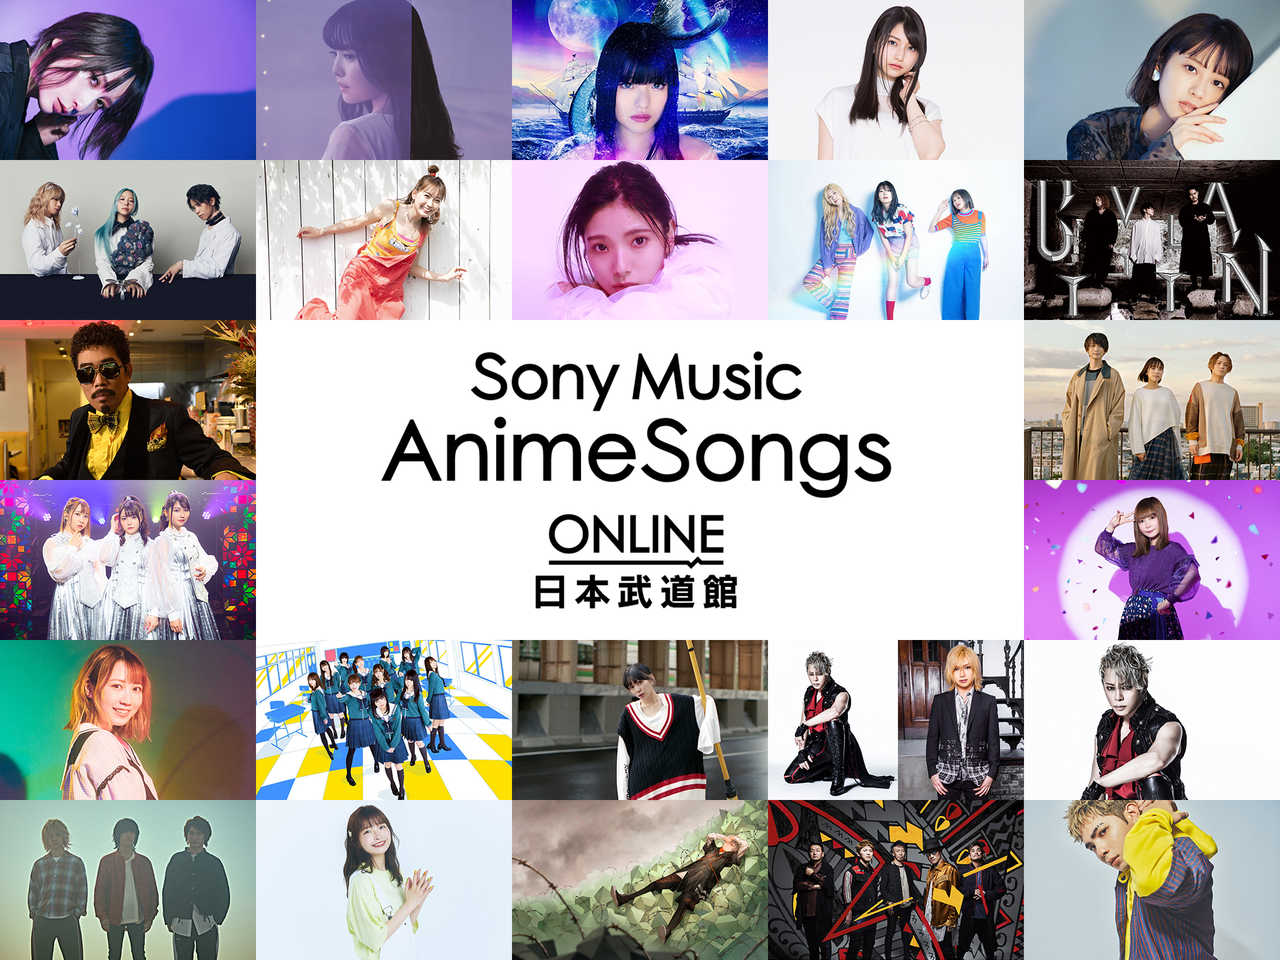 『Sony Music AnimeSongs ONLINE 日本武道館』